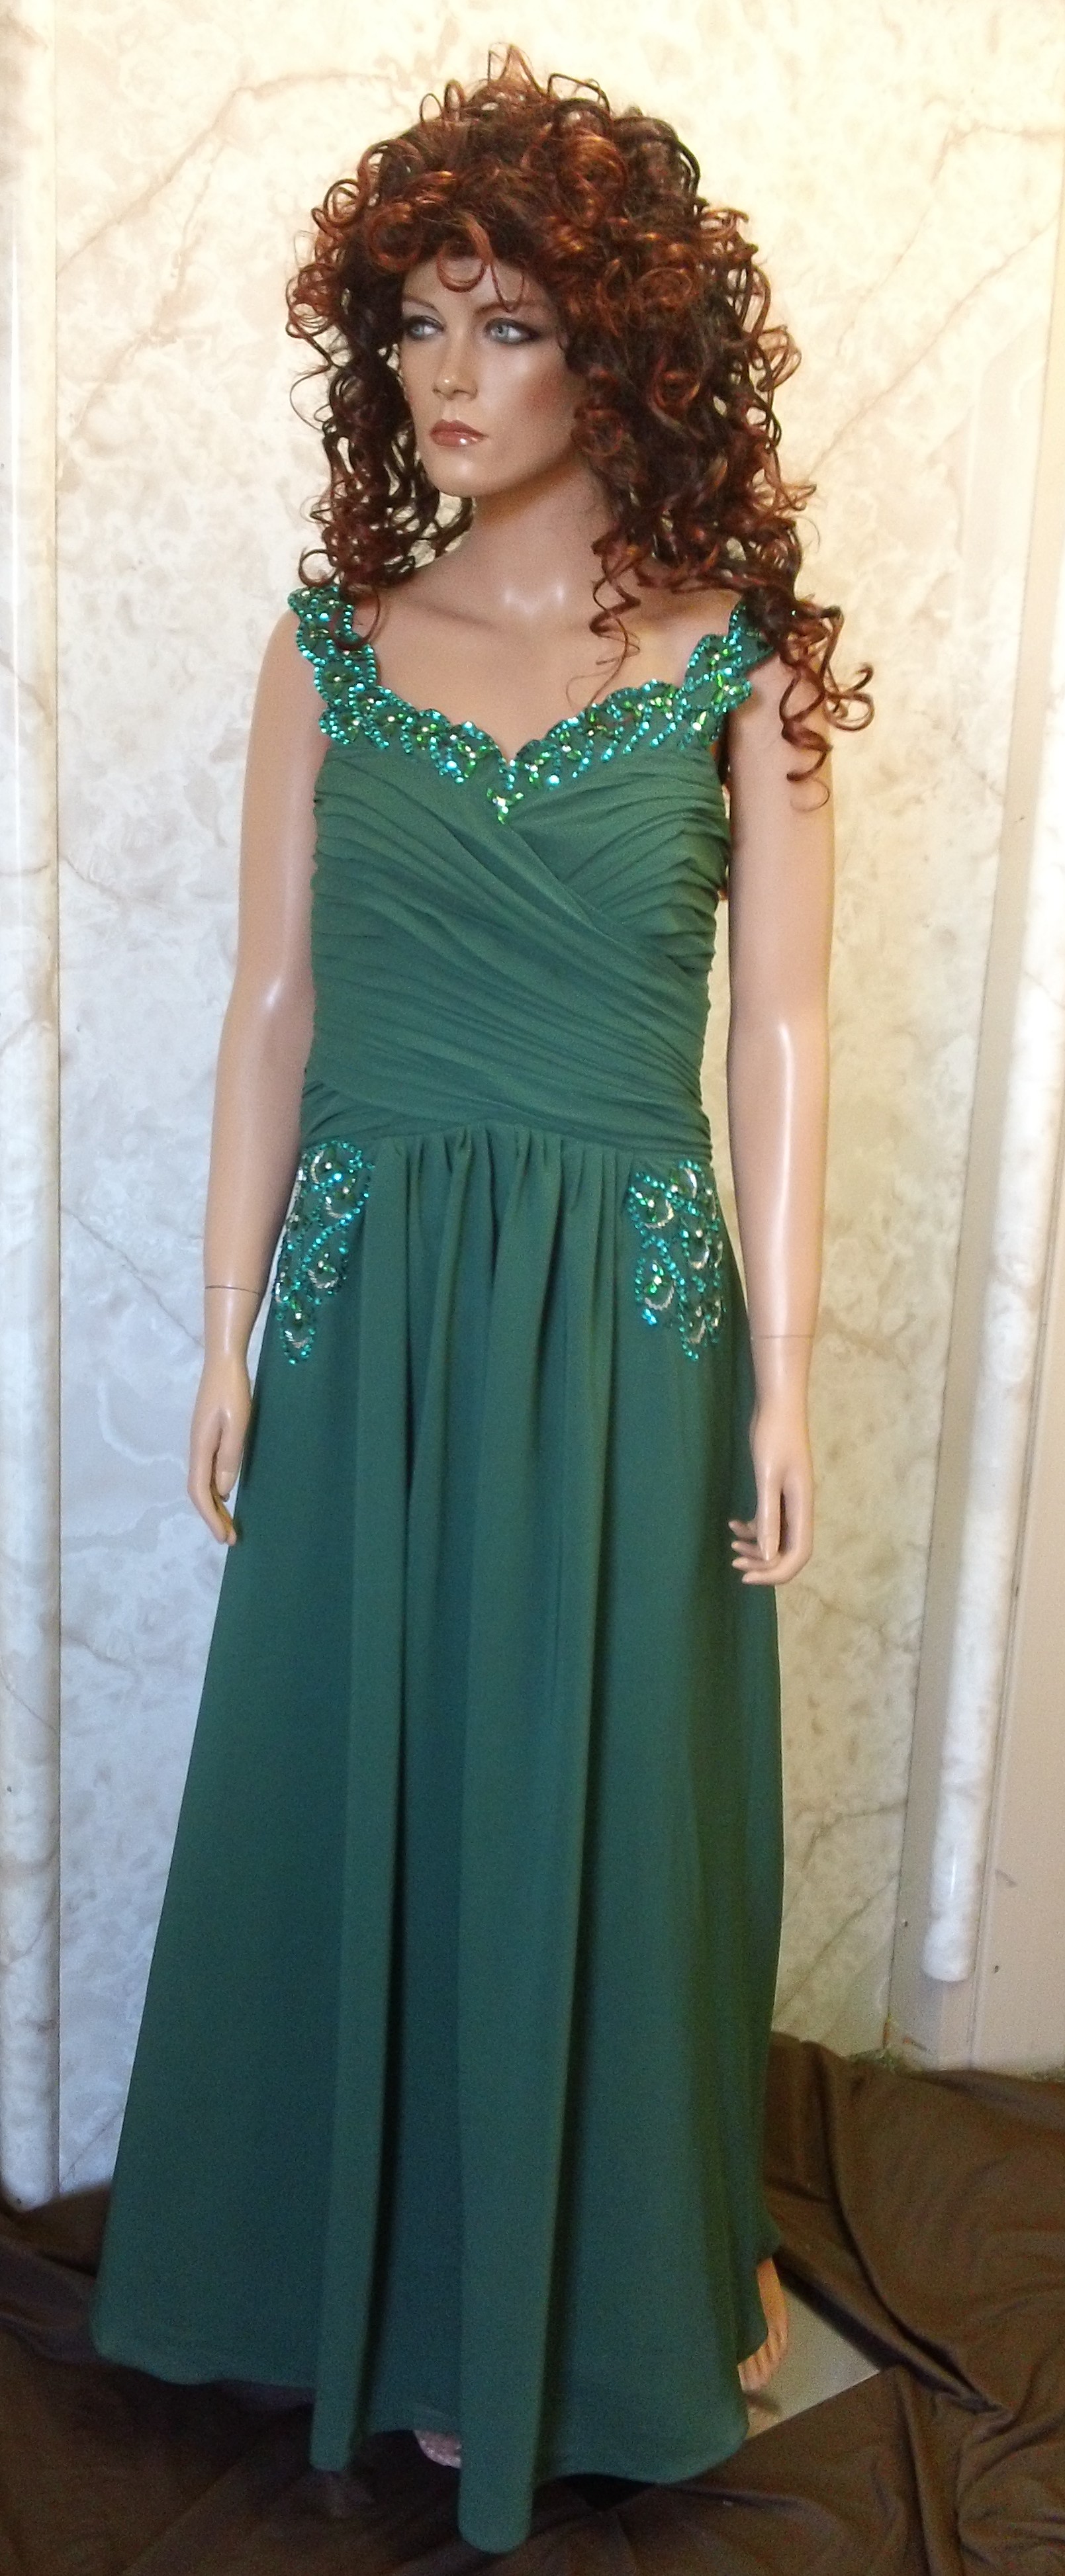 Hunter green chiffon bridesmaid dress